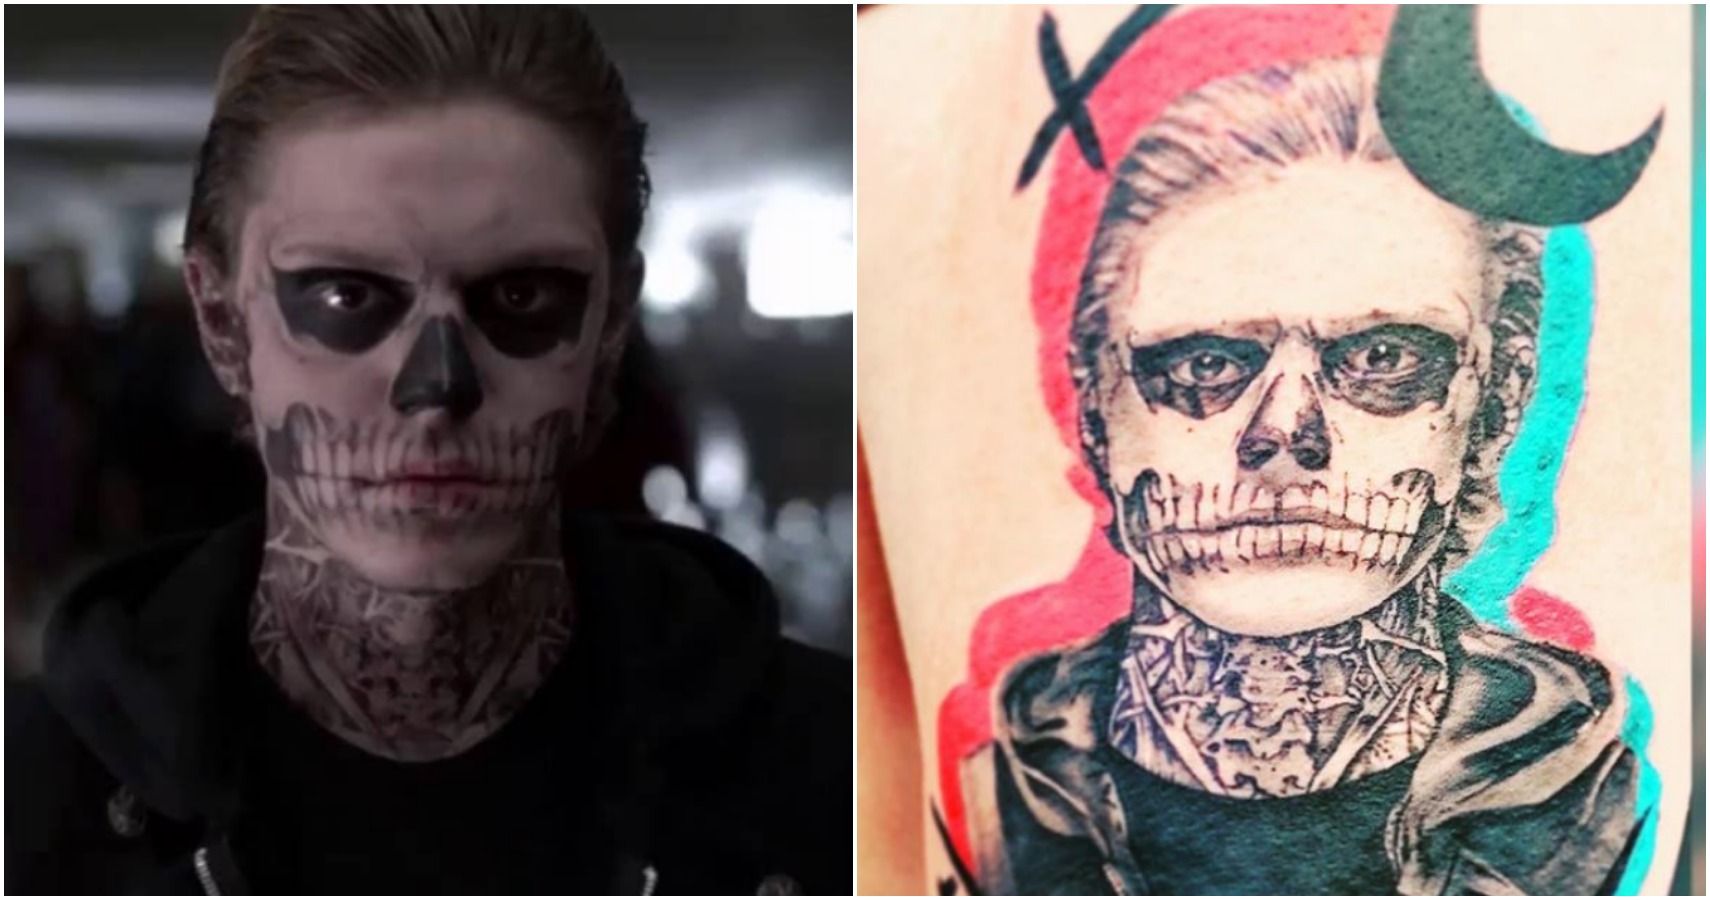 Aaron Hernandez's tattoos may play role in murder trial | Fox News